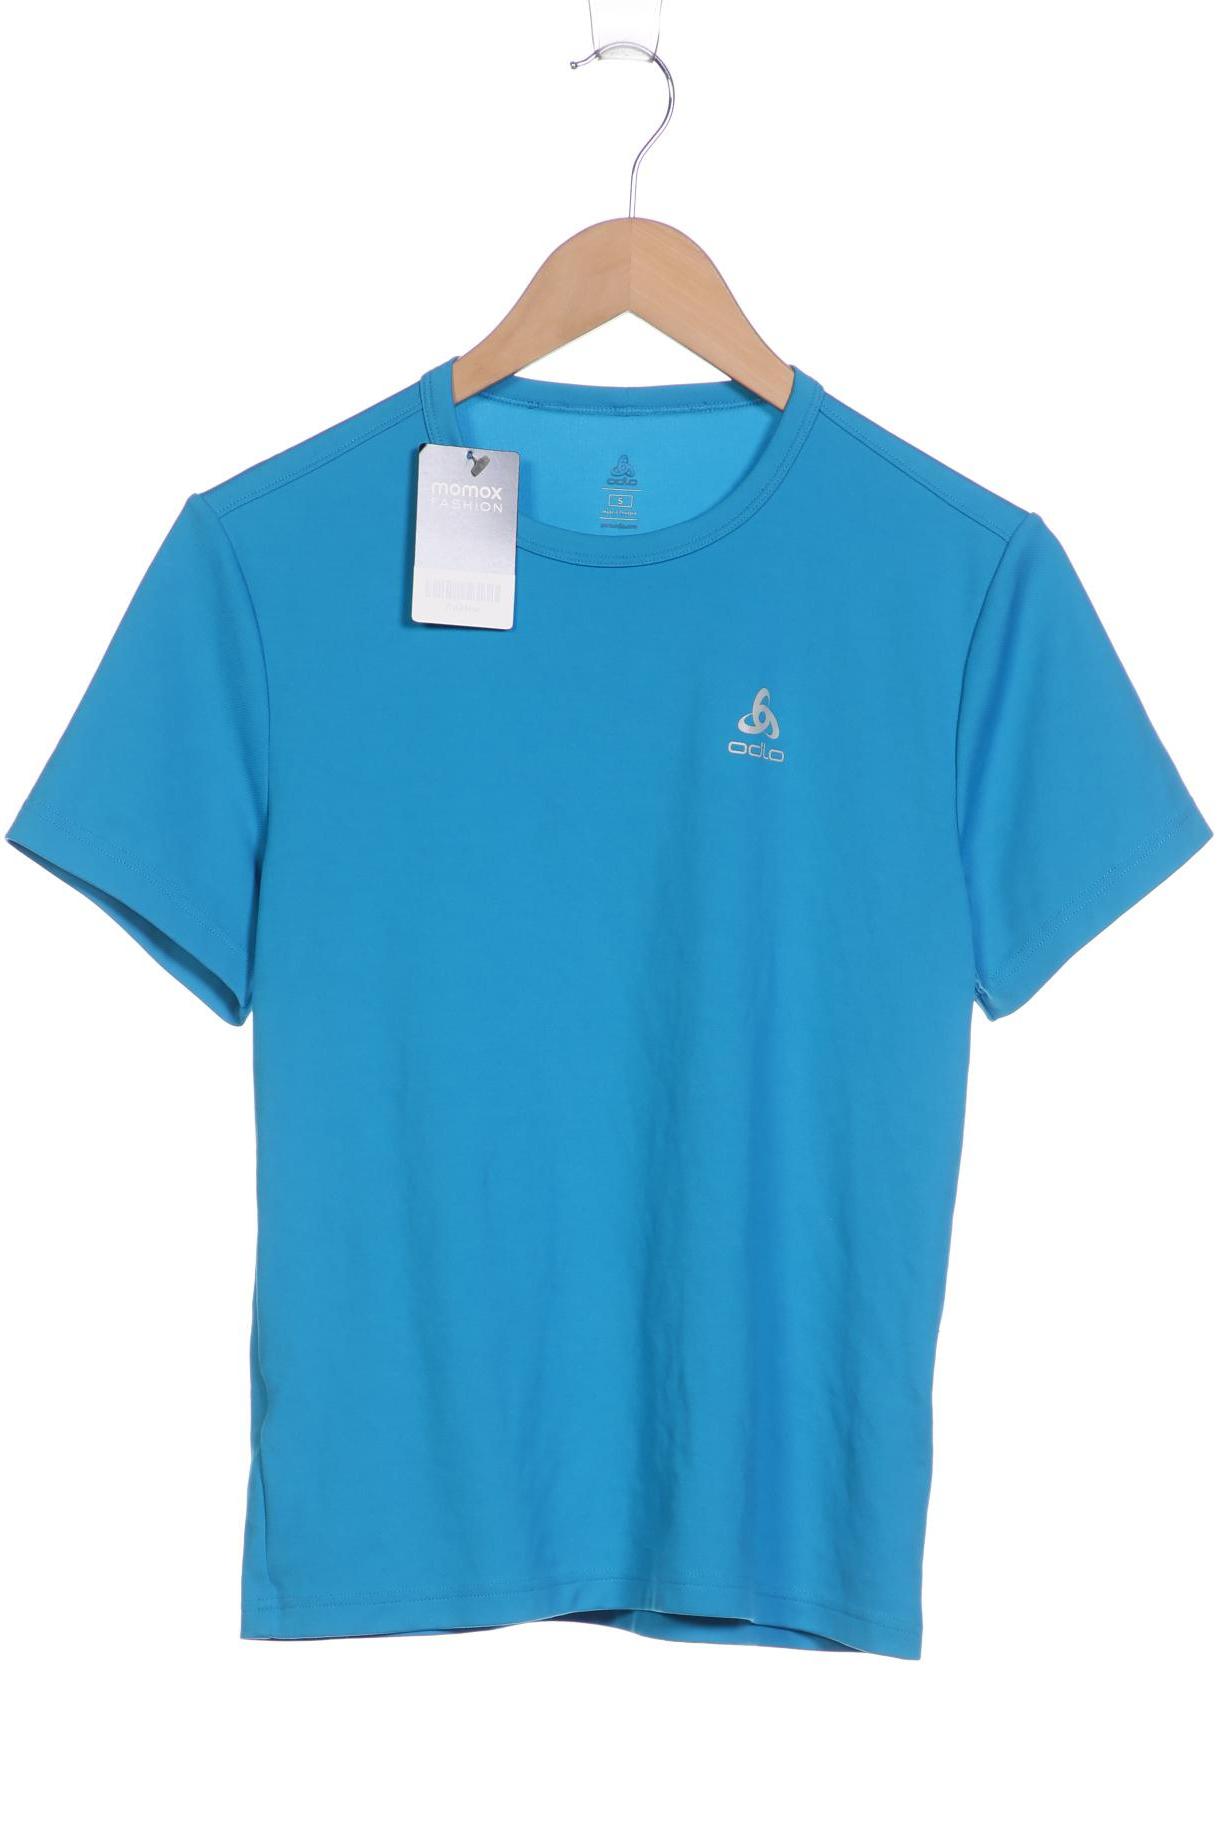 Odlo Herren T-Shirt, blau, Gr. 46 von Odlo